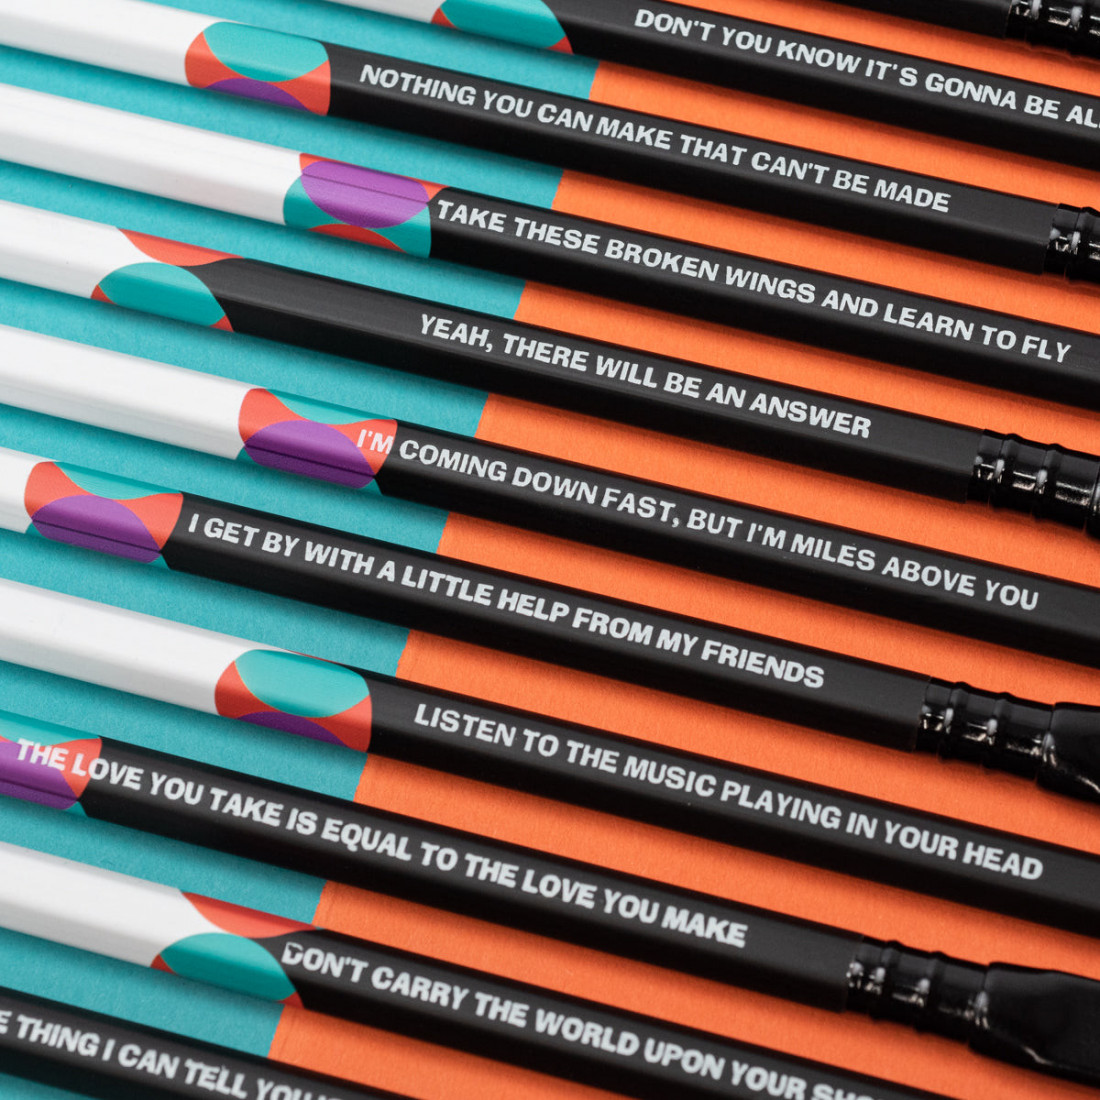 Blackwing pencils Volume 192, set of 12, The Lennon & McCartney pencil